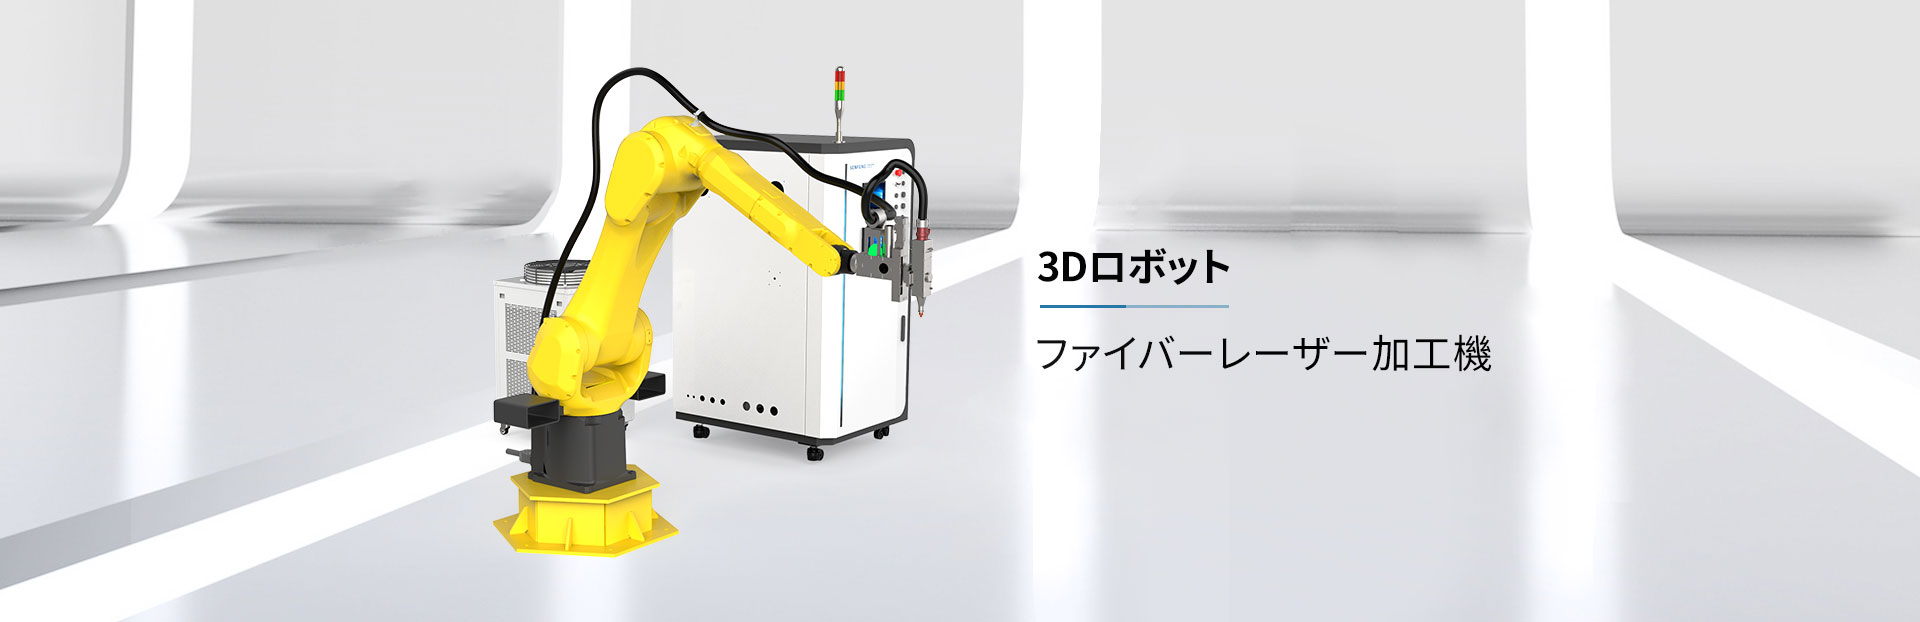 3Dロボットレーザー切断機